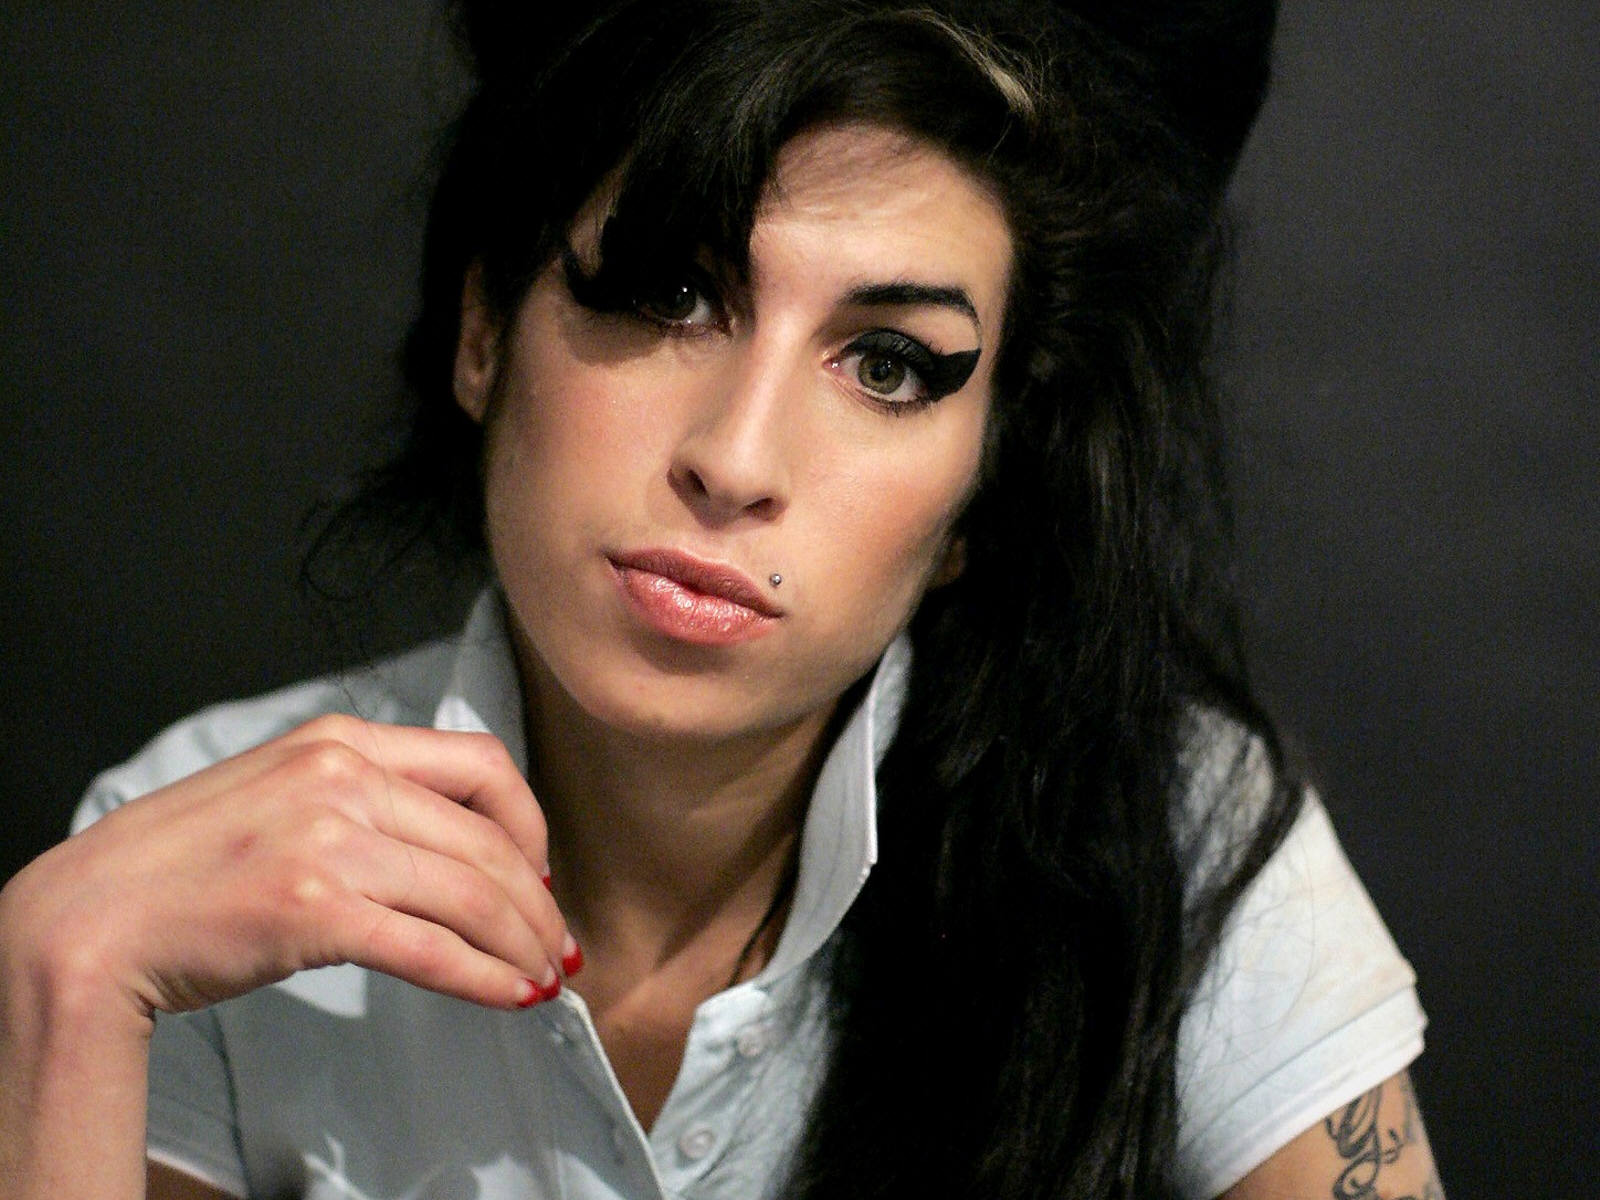 http://2.bp.blogspot.com/-G0kJtLXPoFM/TwCSC4qWcbI/AAAAAAAAH9Y/CxwgD-2kz6w/s1600/Amy-Winehouse-Divulga%25C3%25A7%25C3%25A3o1.jpg